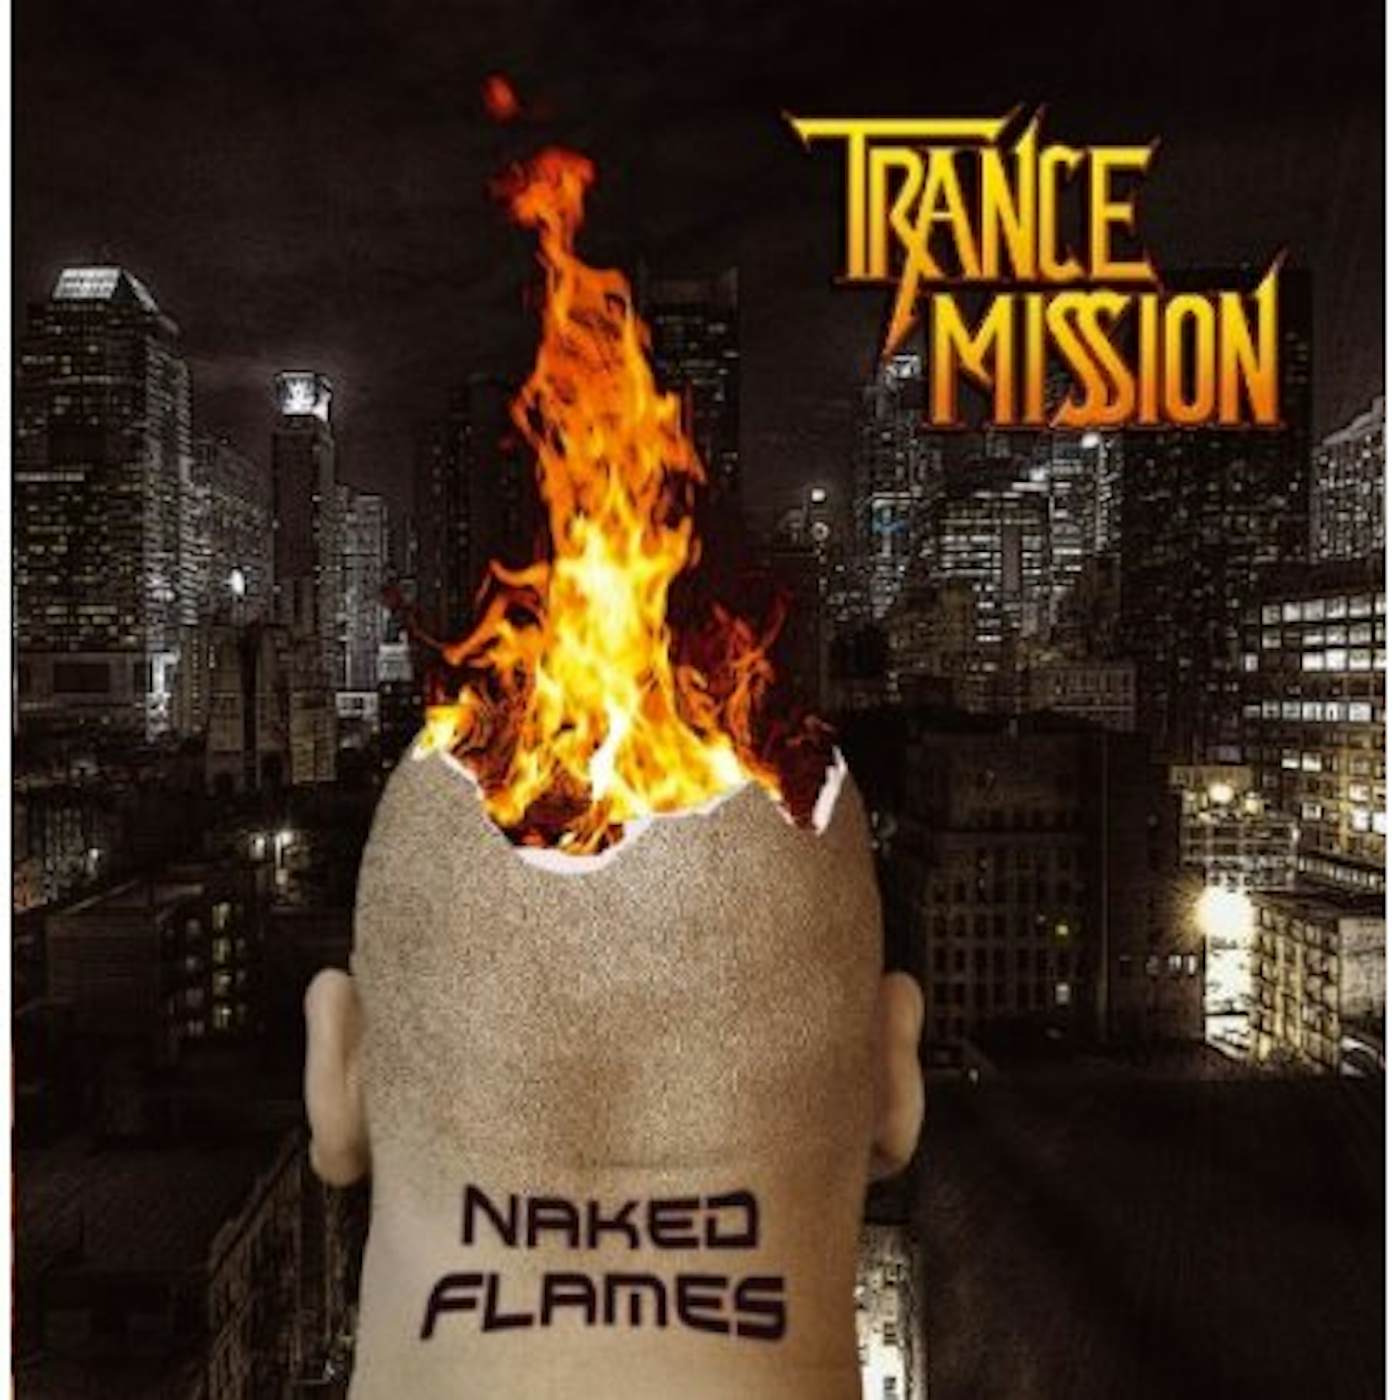 Trancemission NAKED FLAMES CD